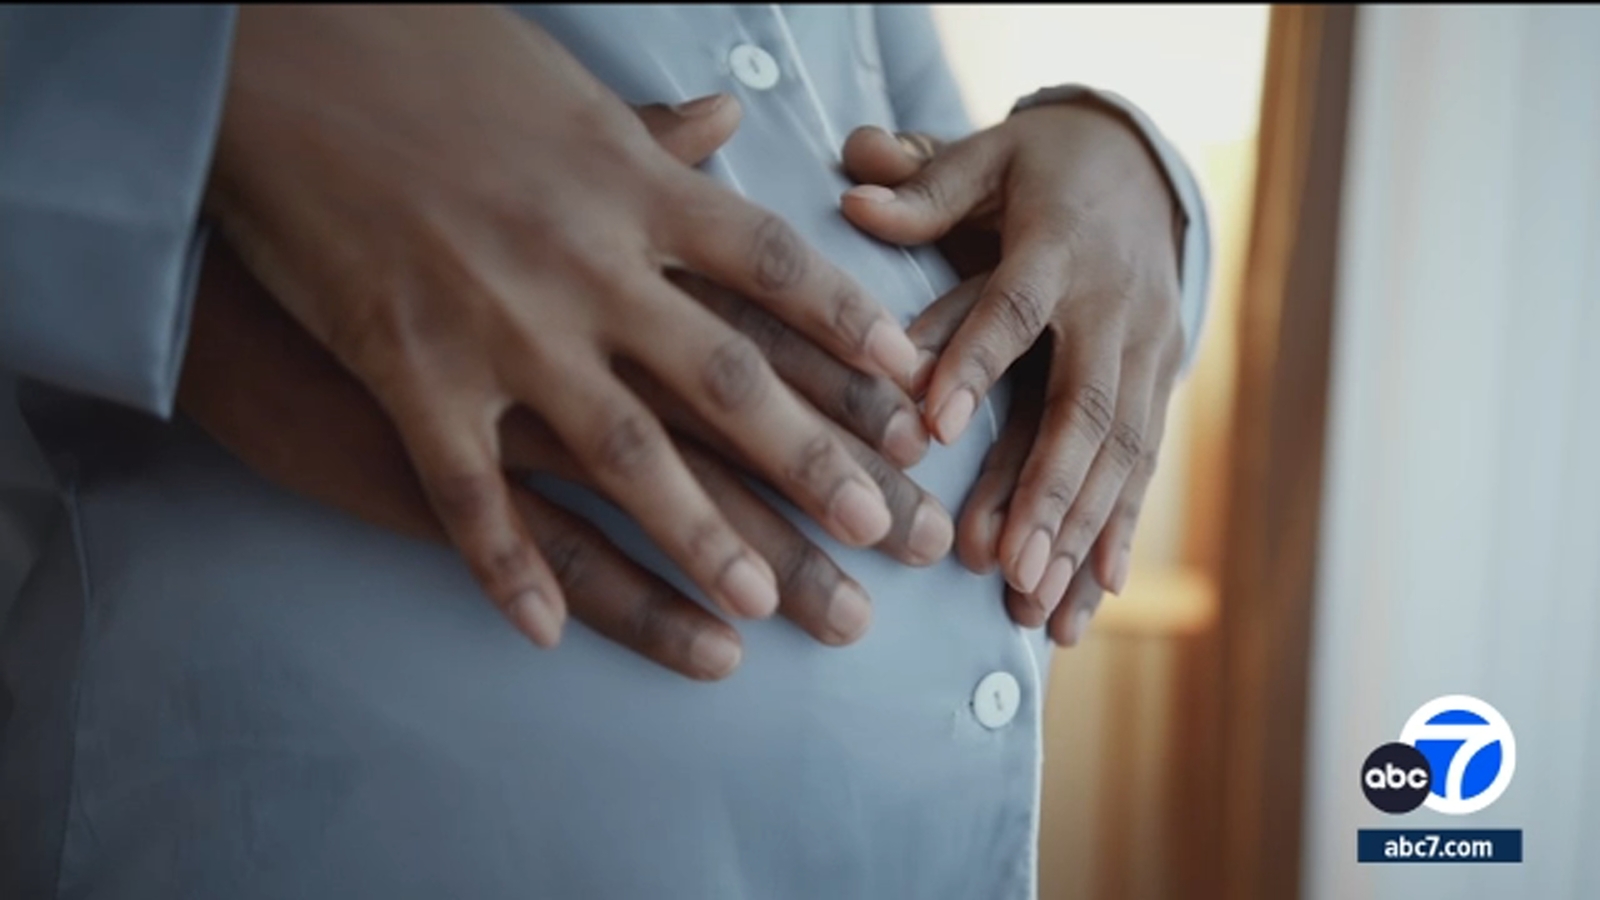 Black Maternal Health Week spotlights disproportionate challenges faced during pregnancy